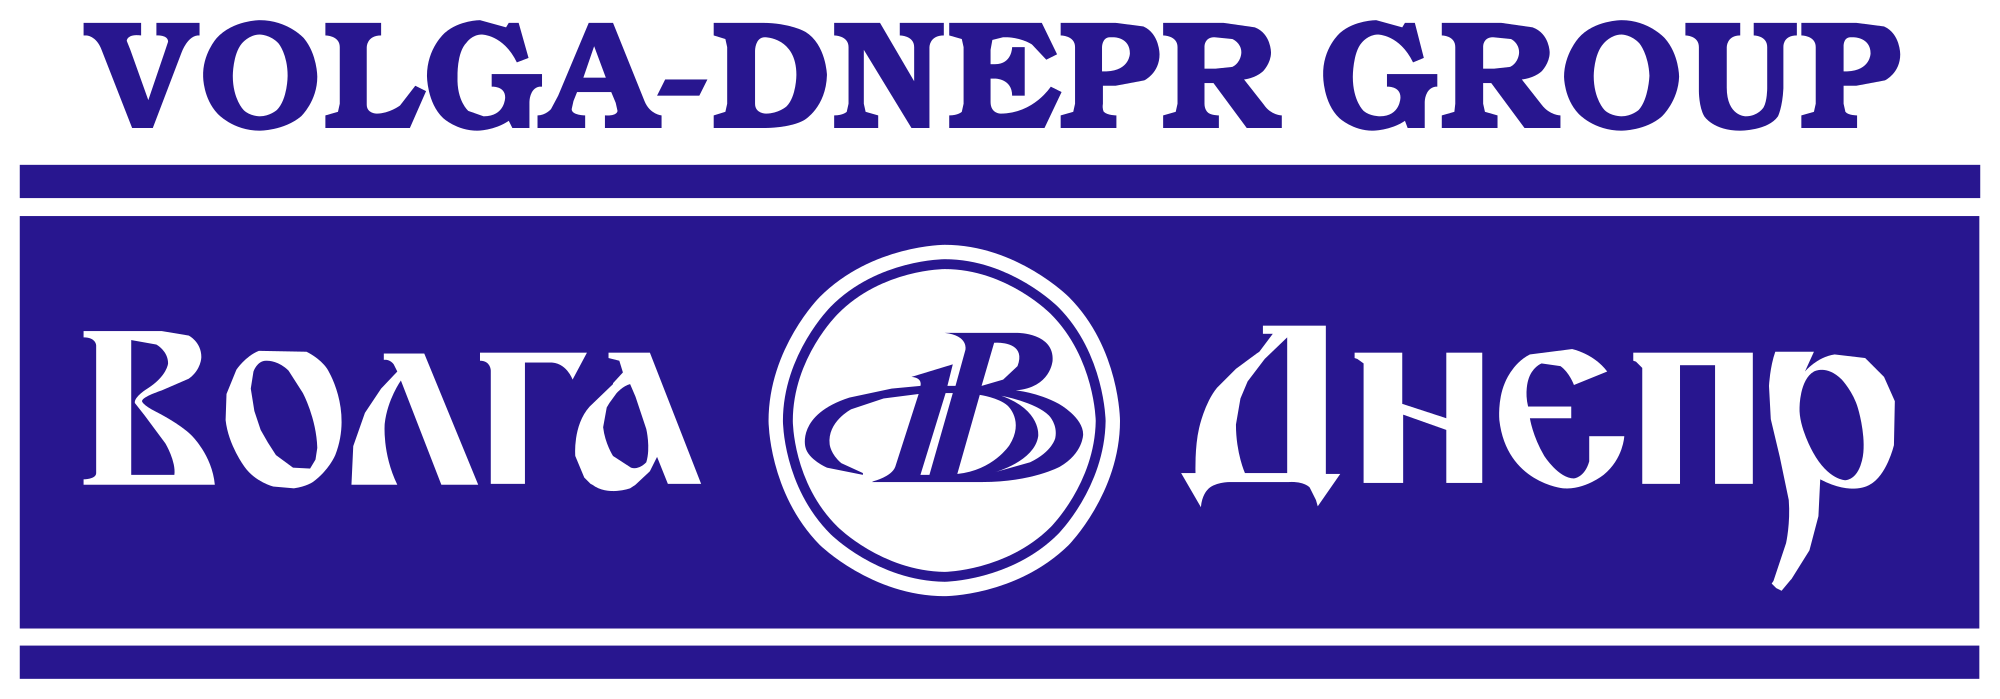 2000px-Volga-Dnepr_Group_logo.svg.png